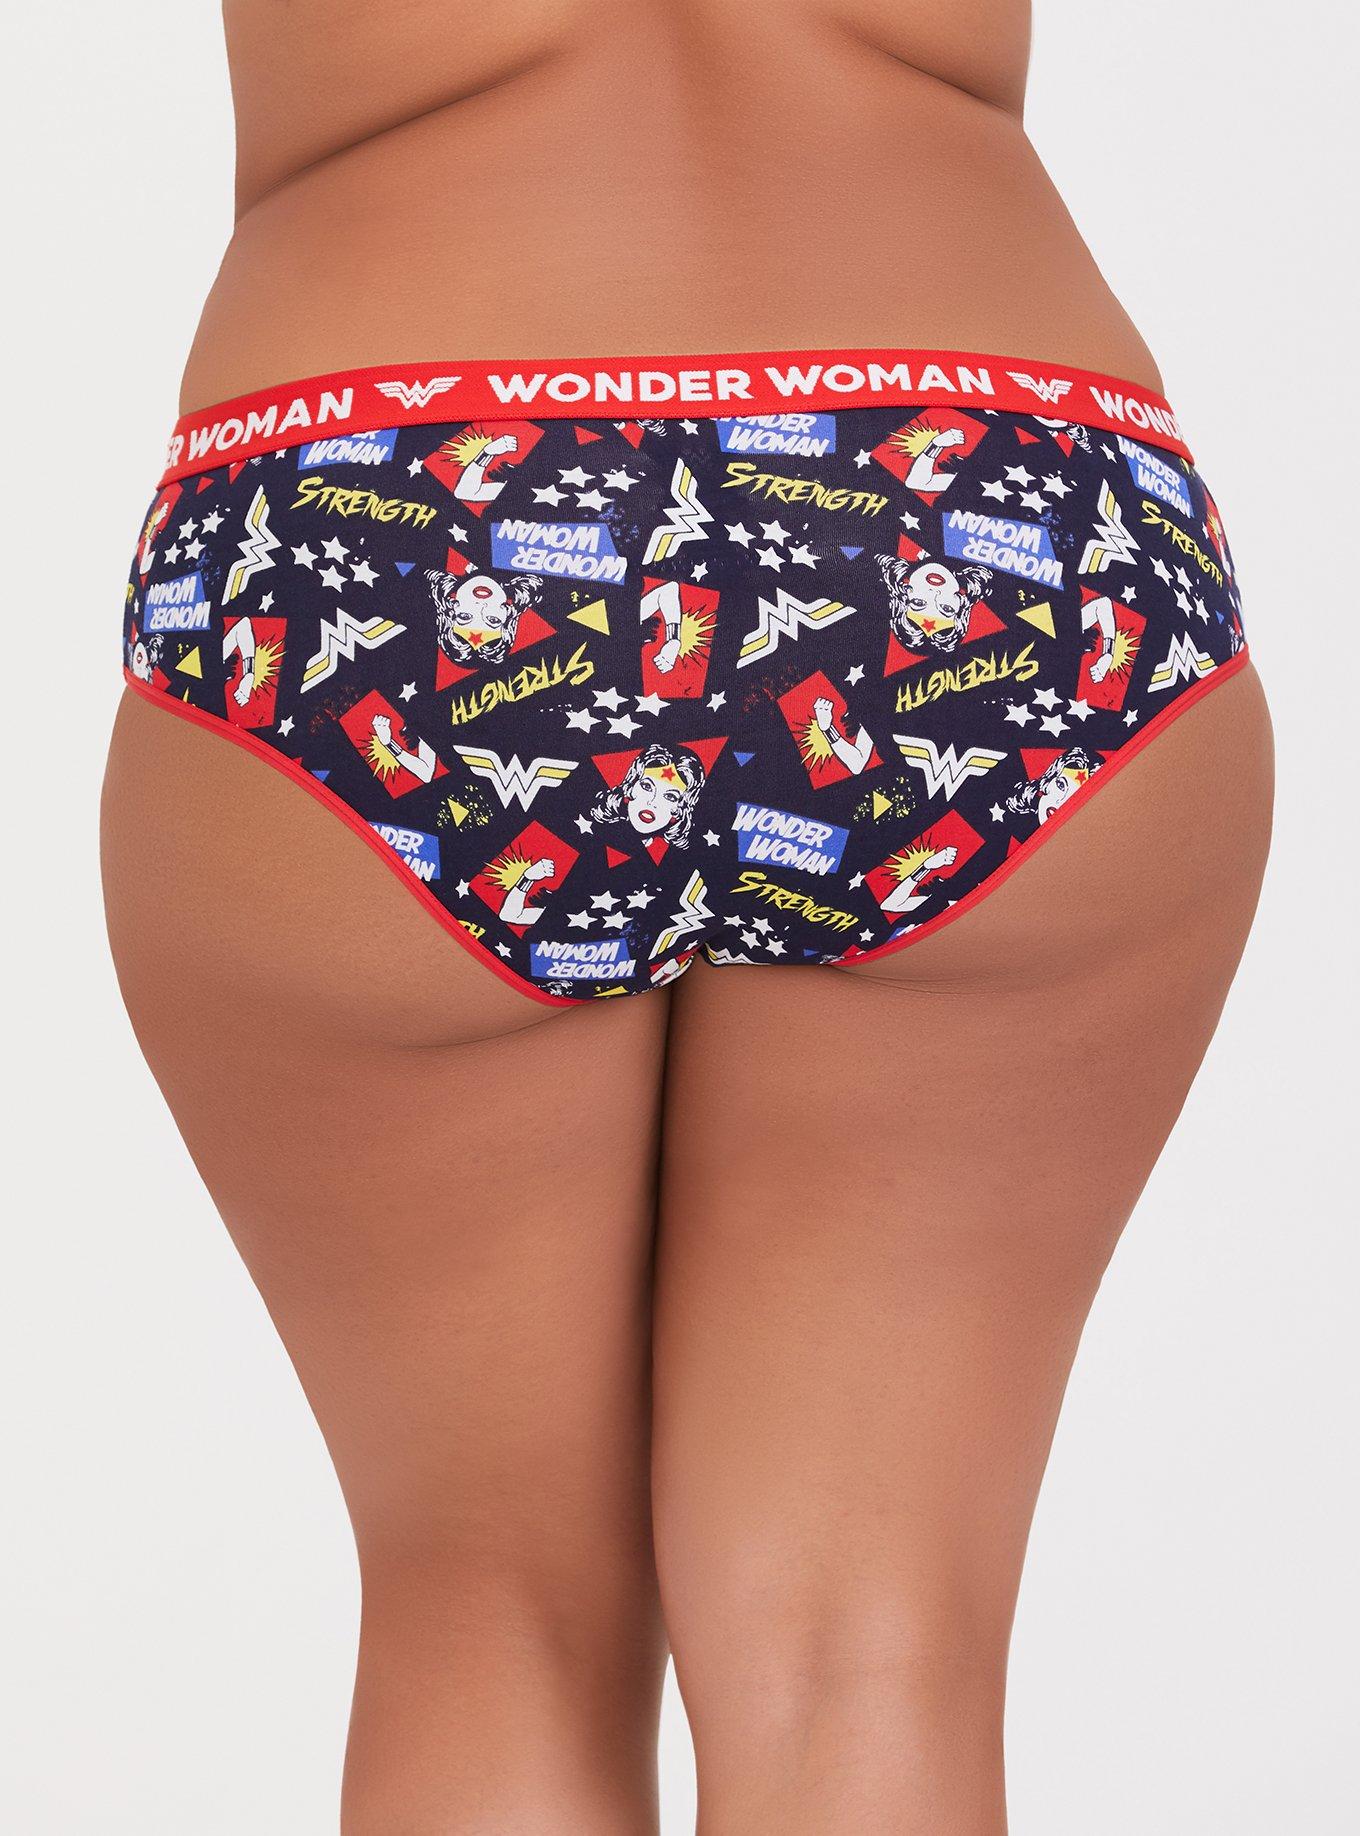 Lingerie Panties Wonder Woman High Rise Knickers Costume -  Canada